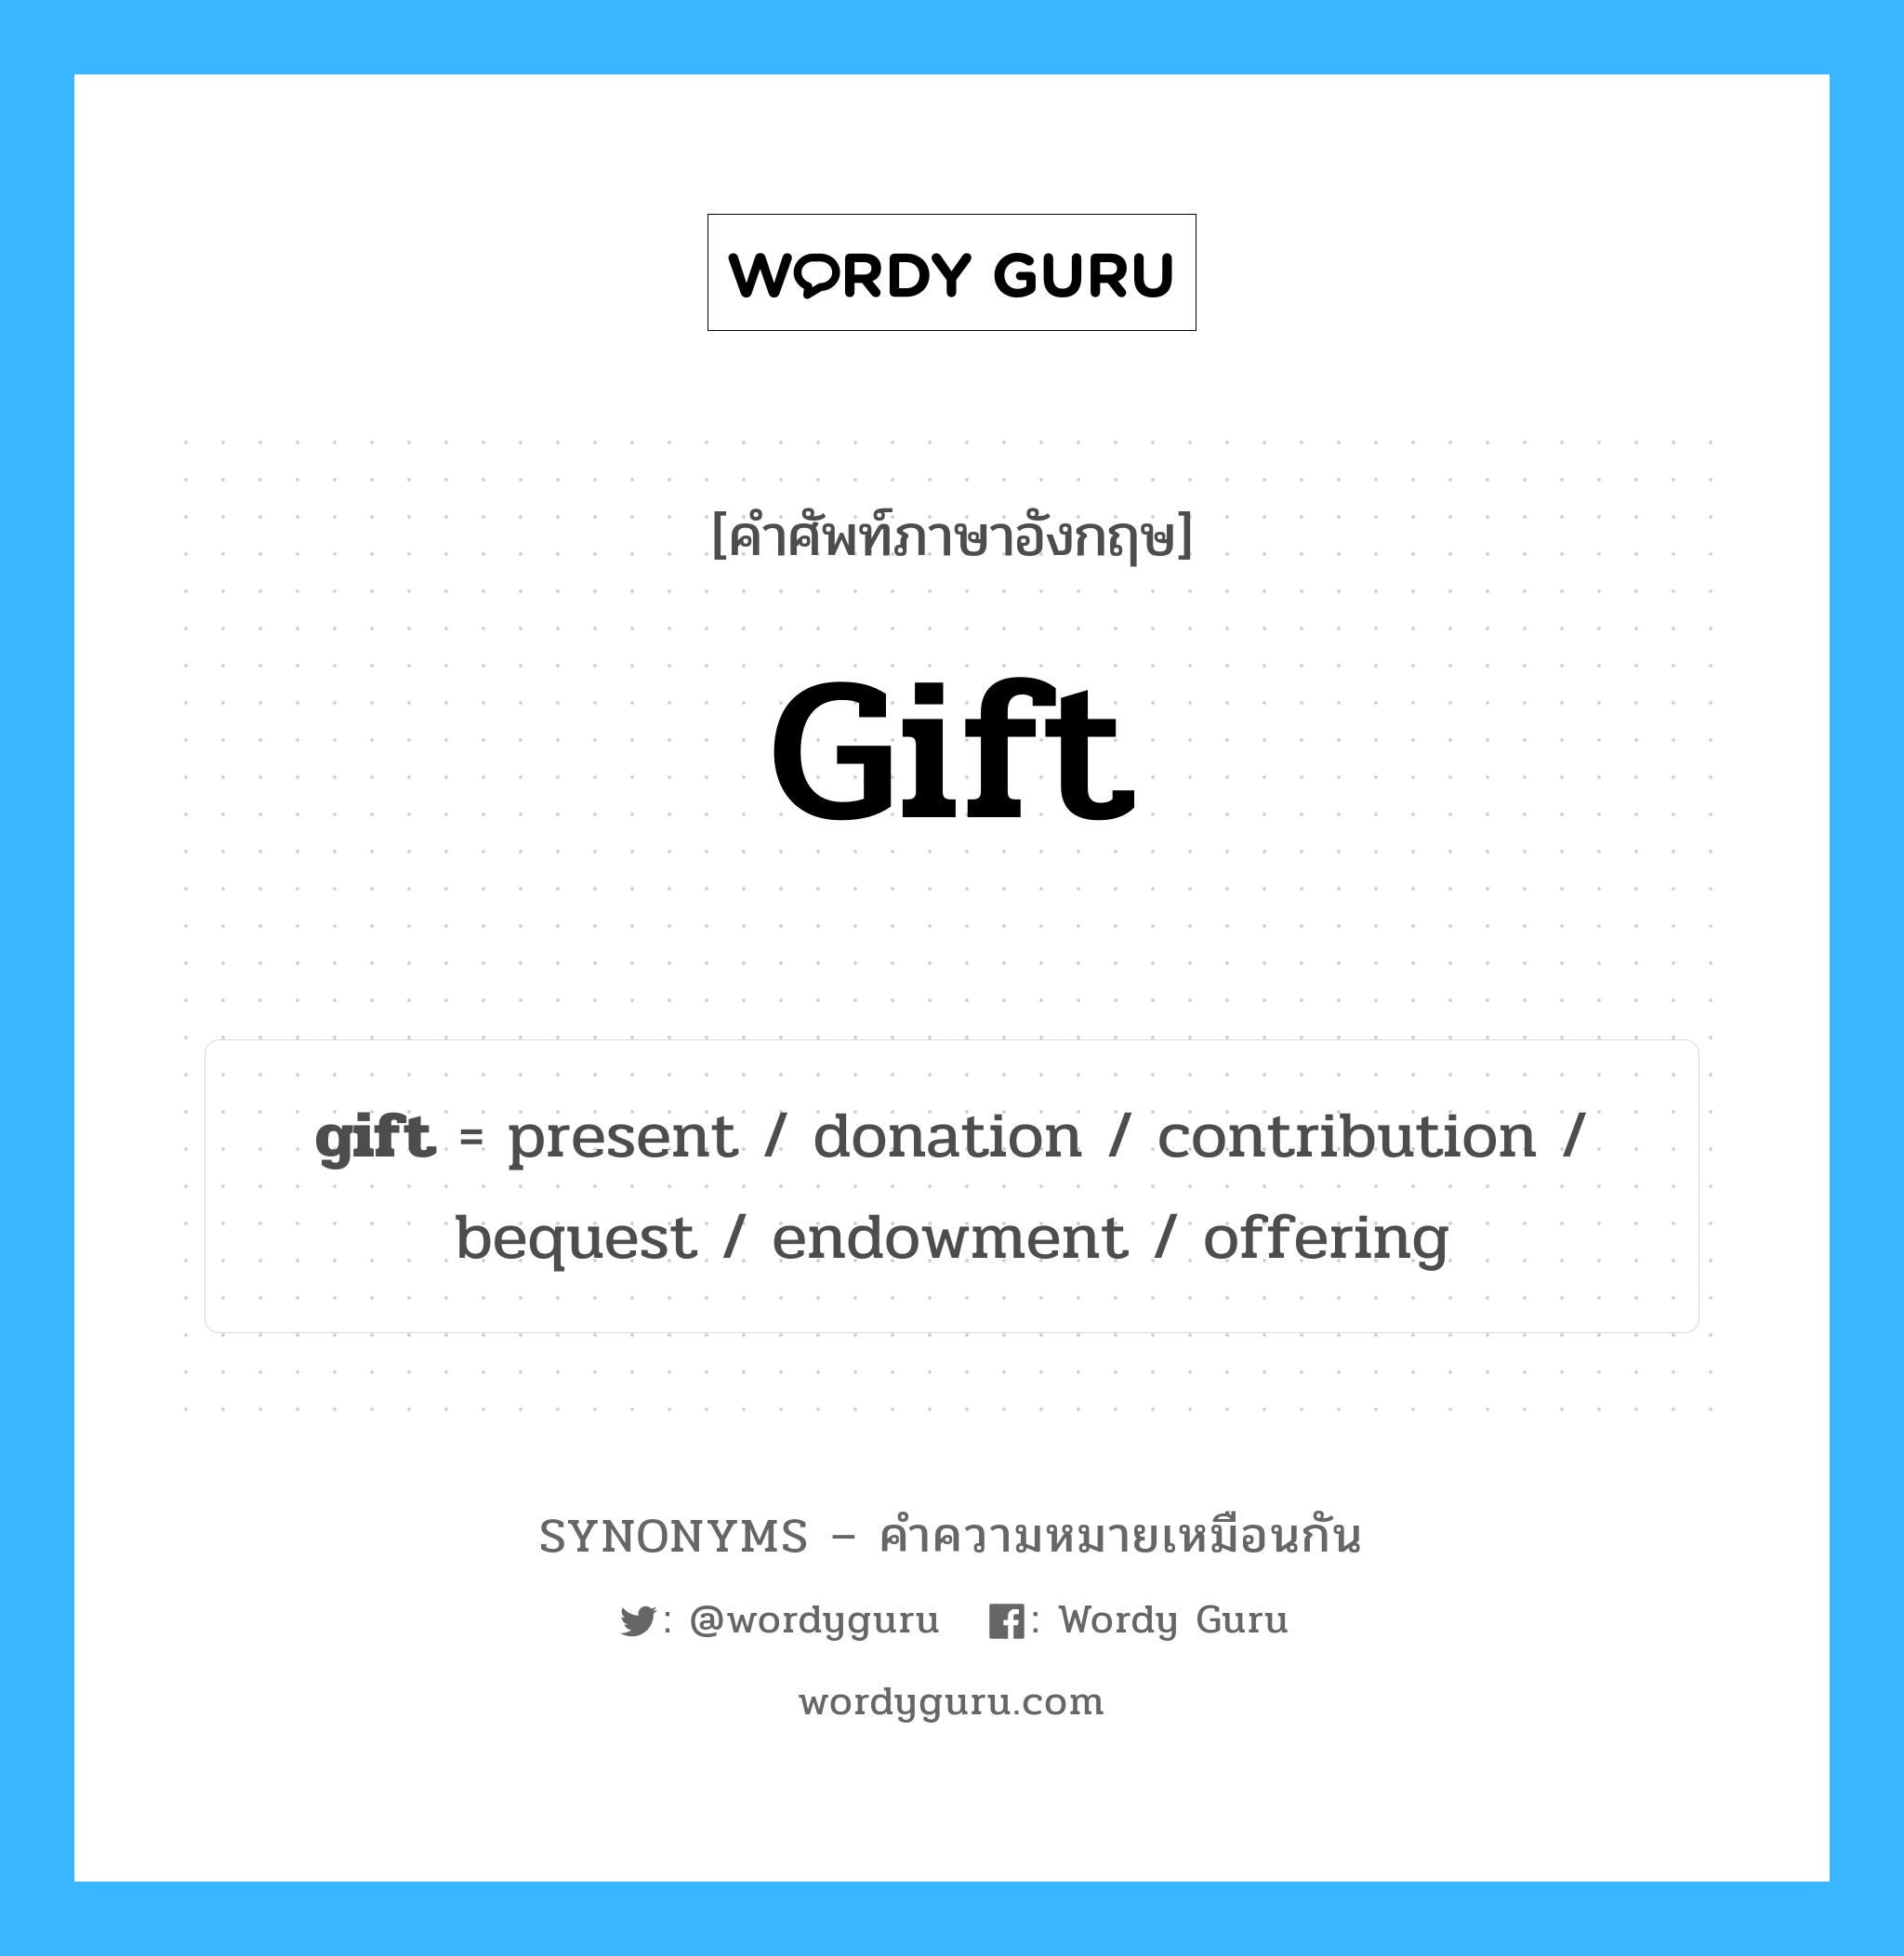 gift เป็นหนึ่งใน present และมีคำอื่น ๆ อีกดังนี้, คำศัพท์ภาษาอังกฤษ gift ความหมายคล้ายกันกับ present แปลว่า ปัจจุบัน หมวด present